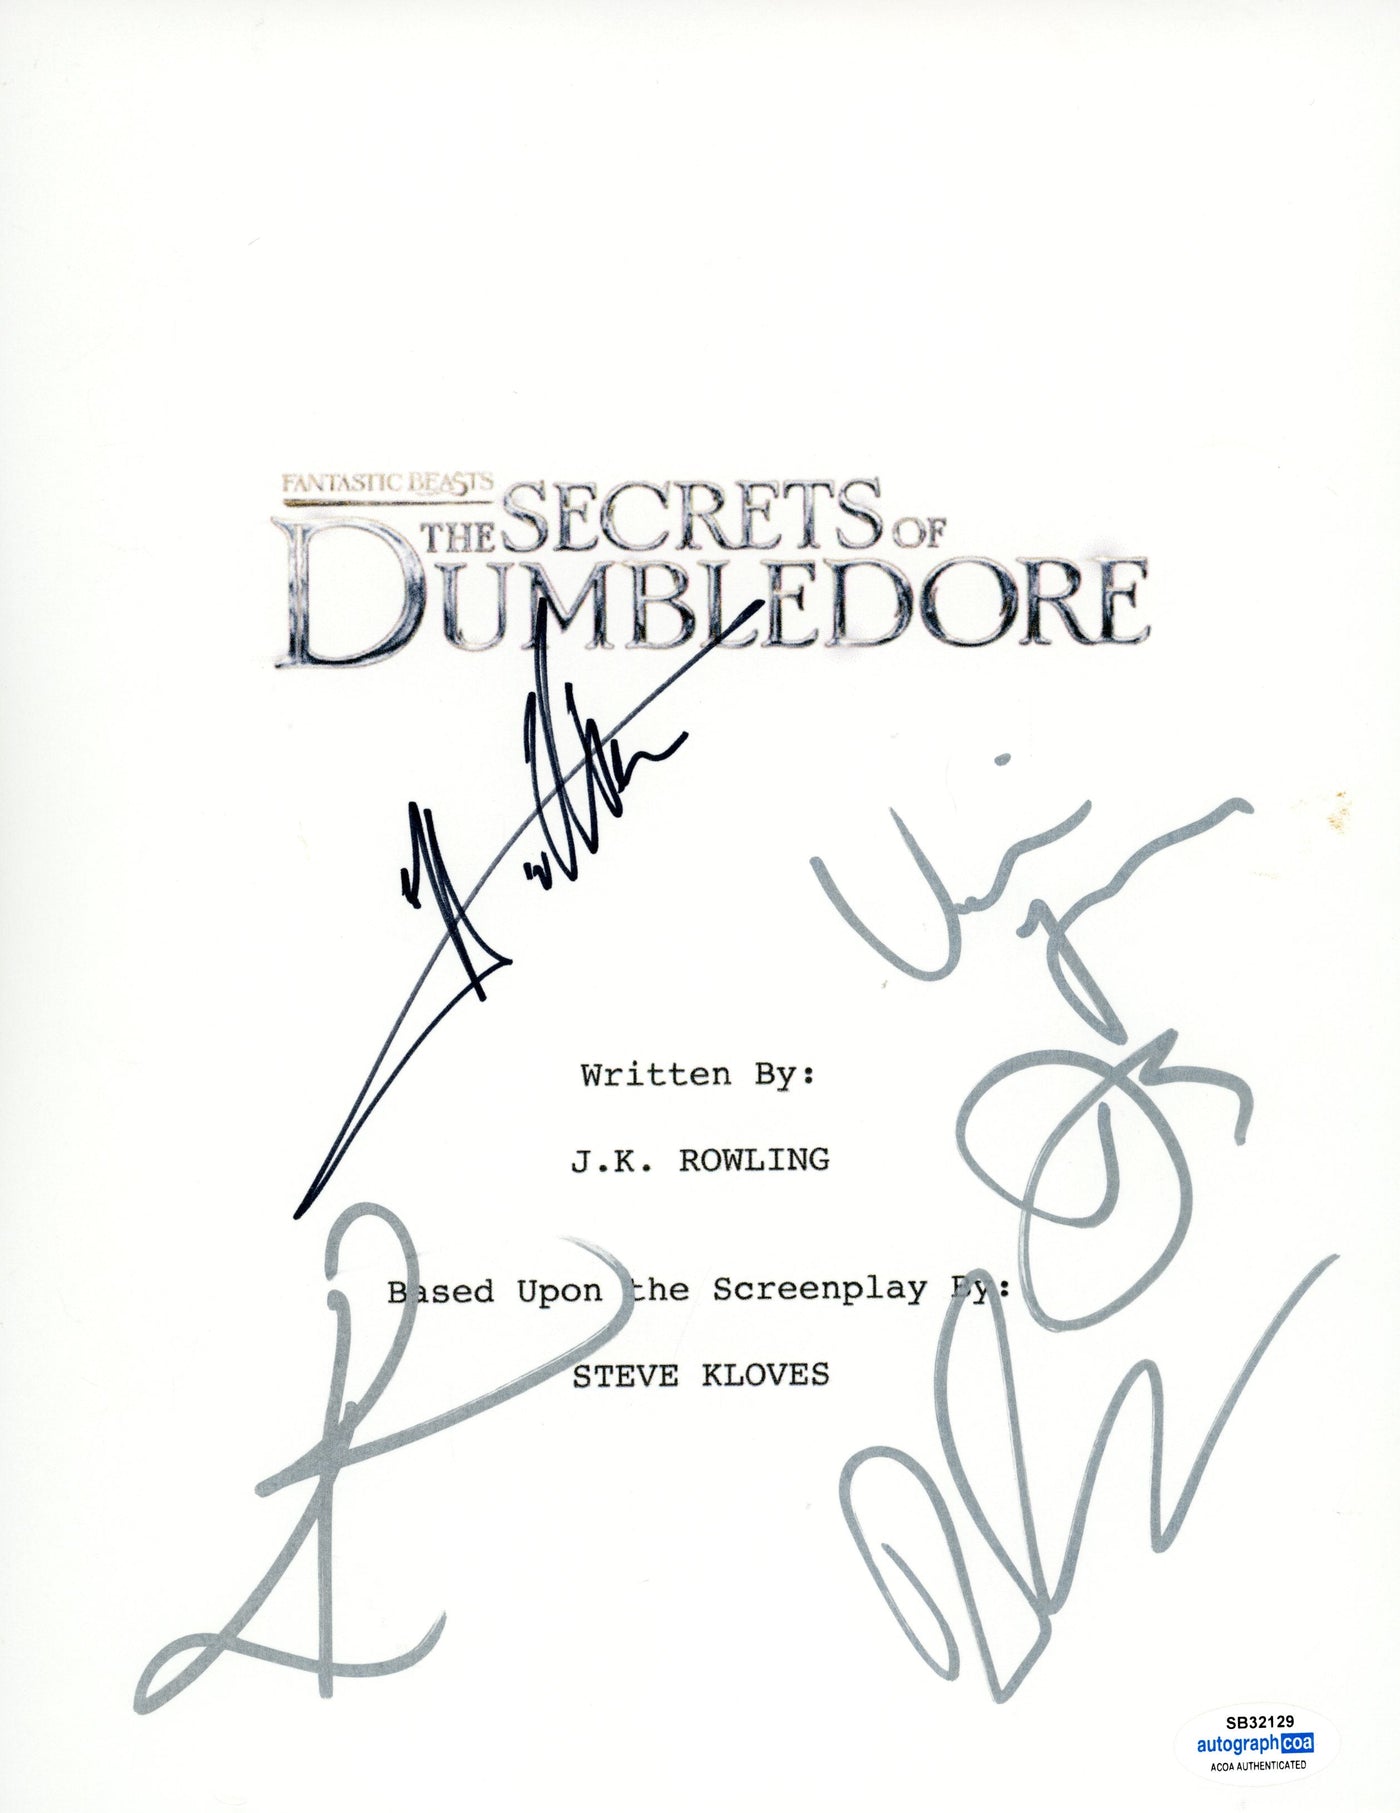 Fantastic Beasts Cast Eddie Redmayne Signed Script Cover Autographed ACOA